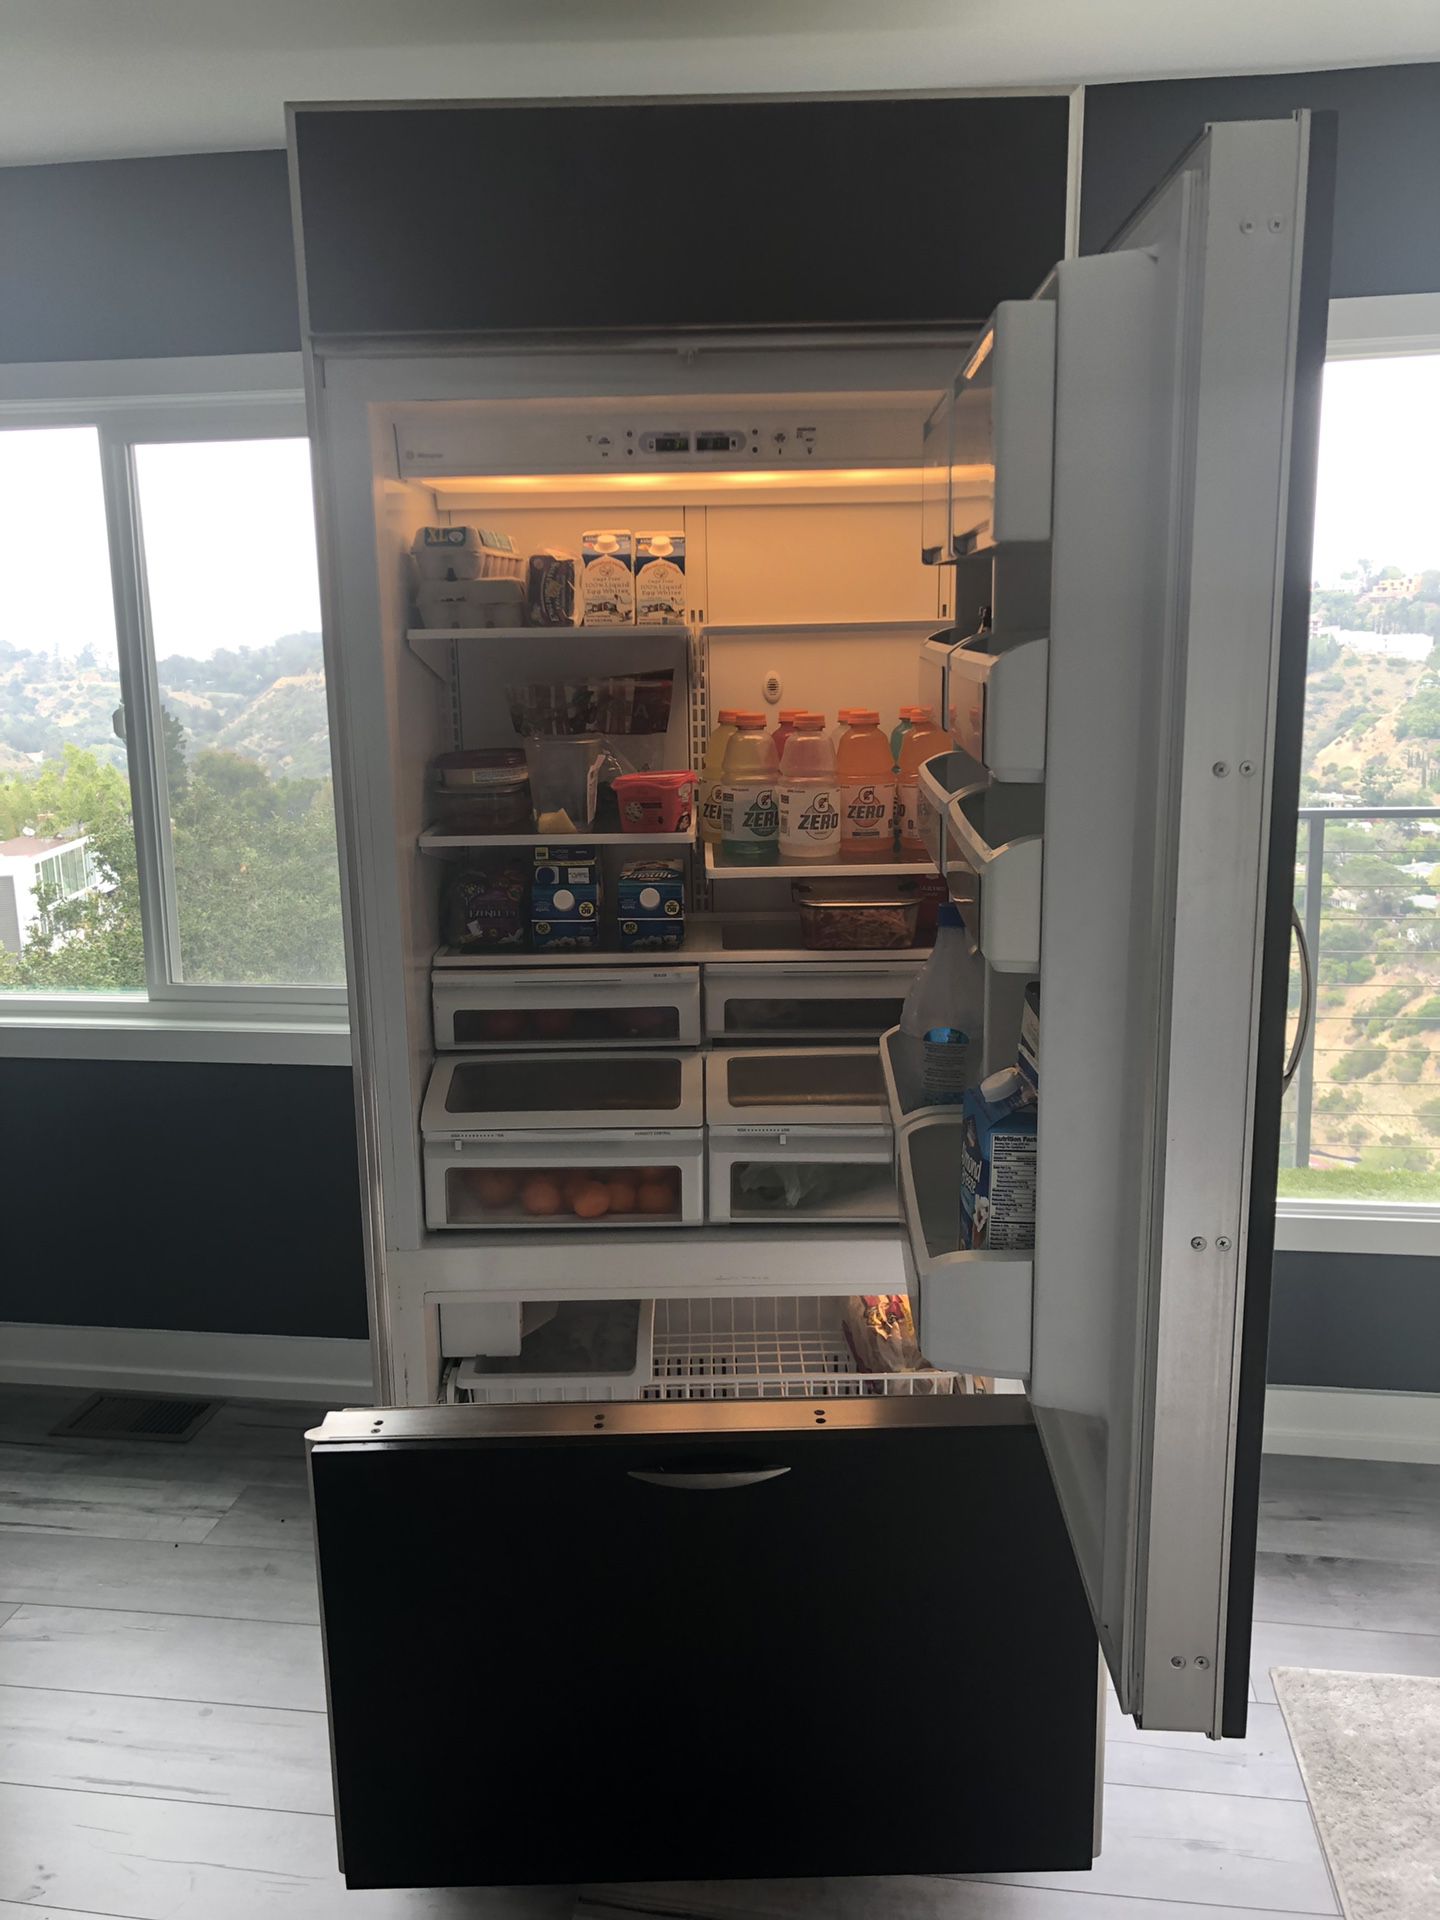 Monogram refrigerator